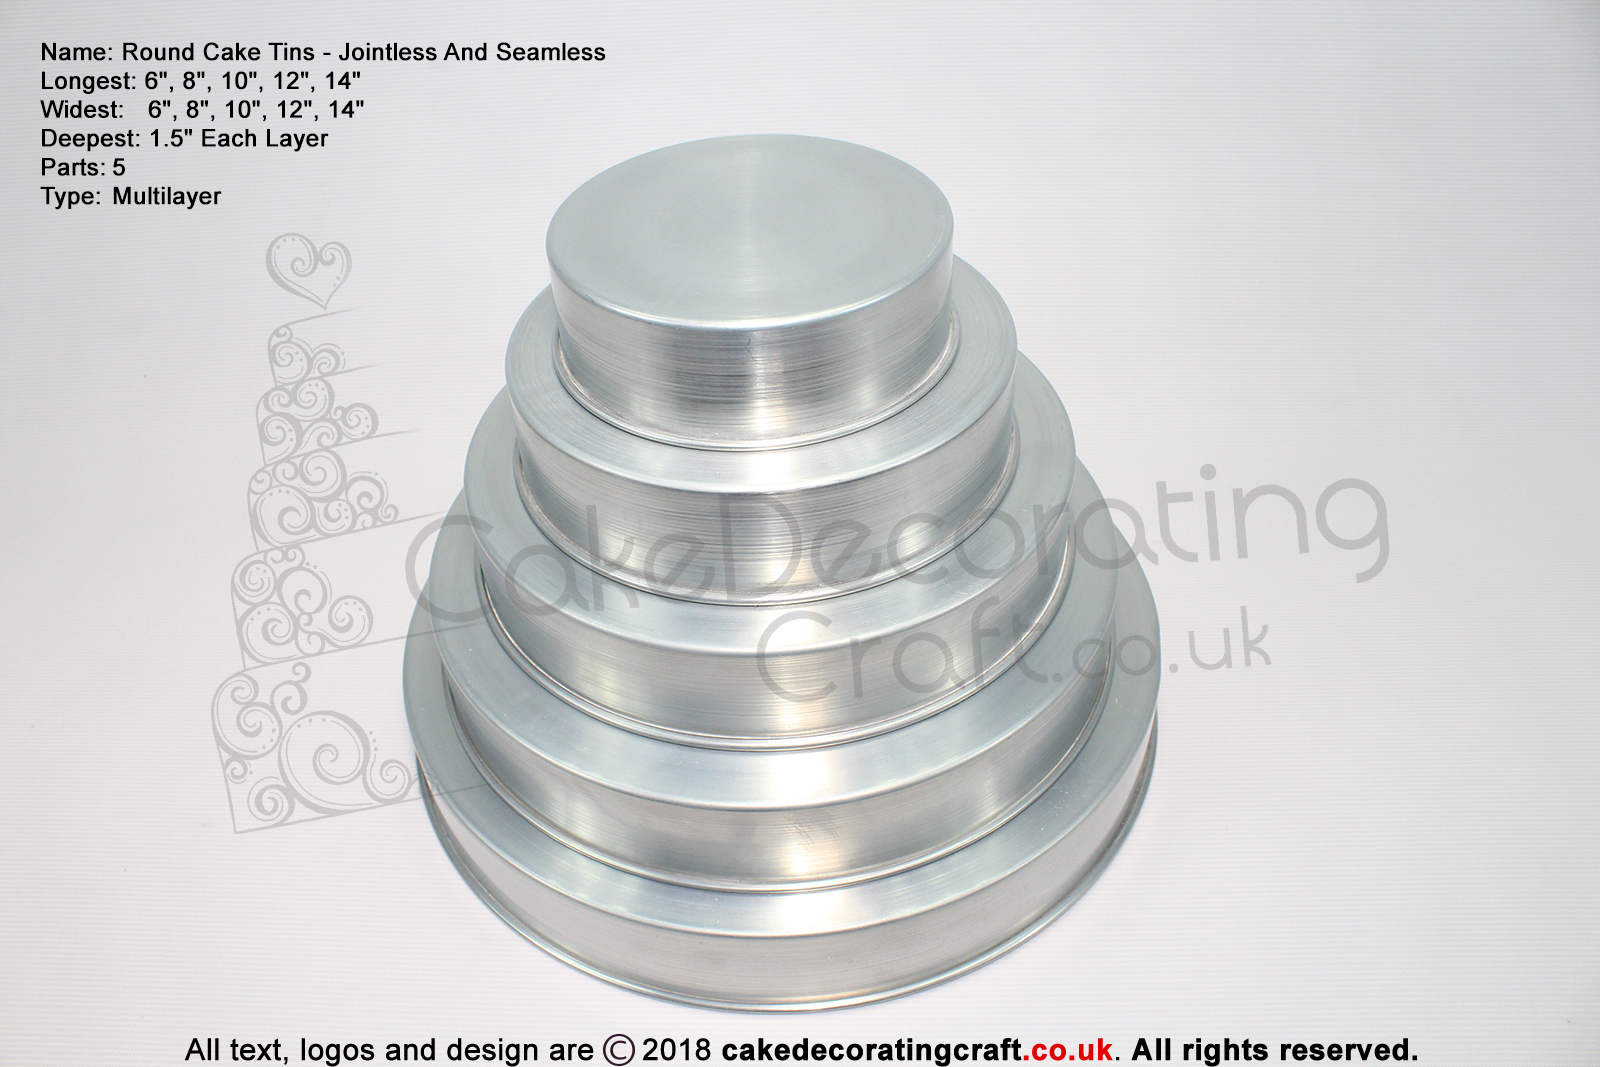 Round Cake Baking Tin | 1.5" Deep | Size 6 8 10 12 14 " | 5 Tiers | Jointless & Seamless | Rainbow Multi Layer